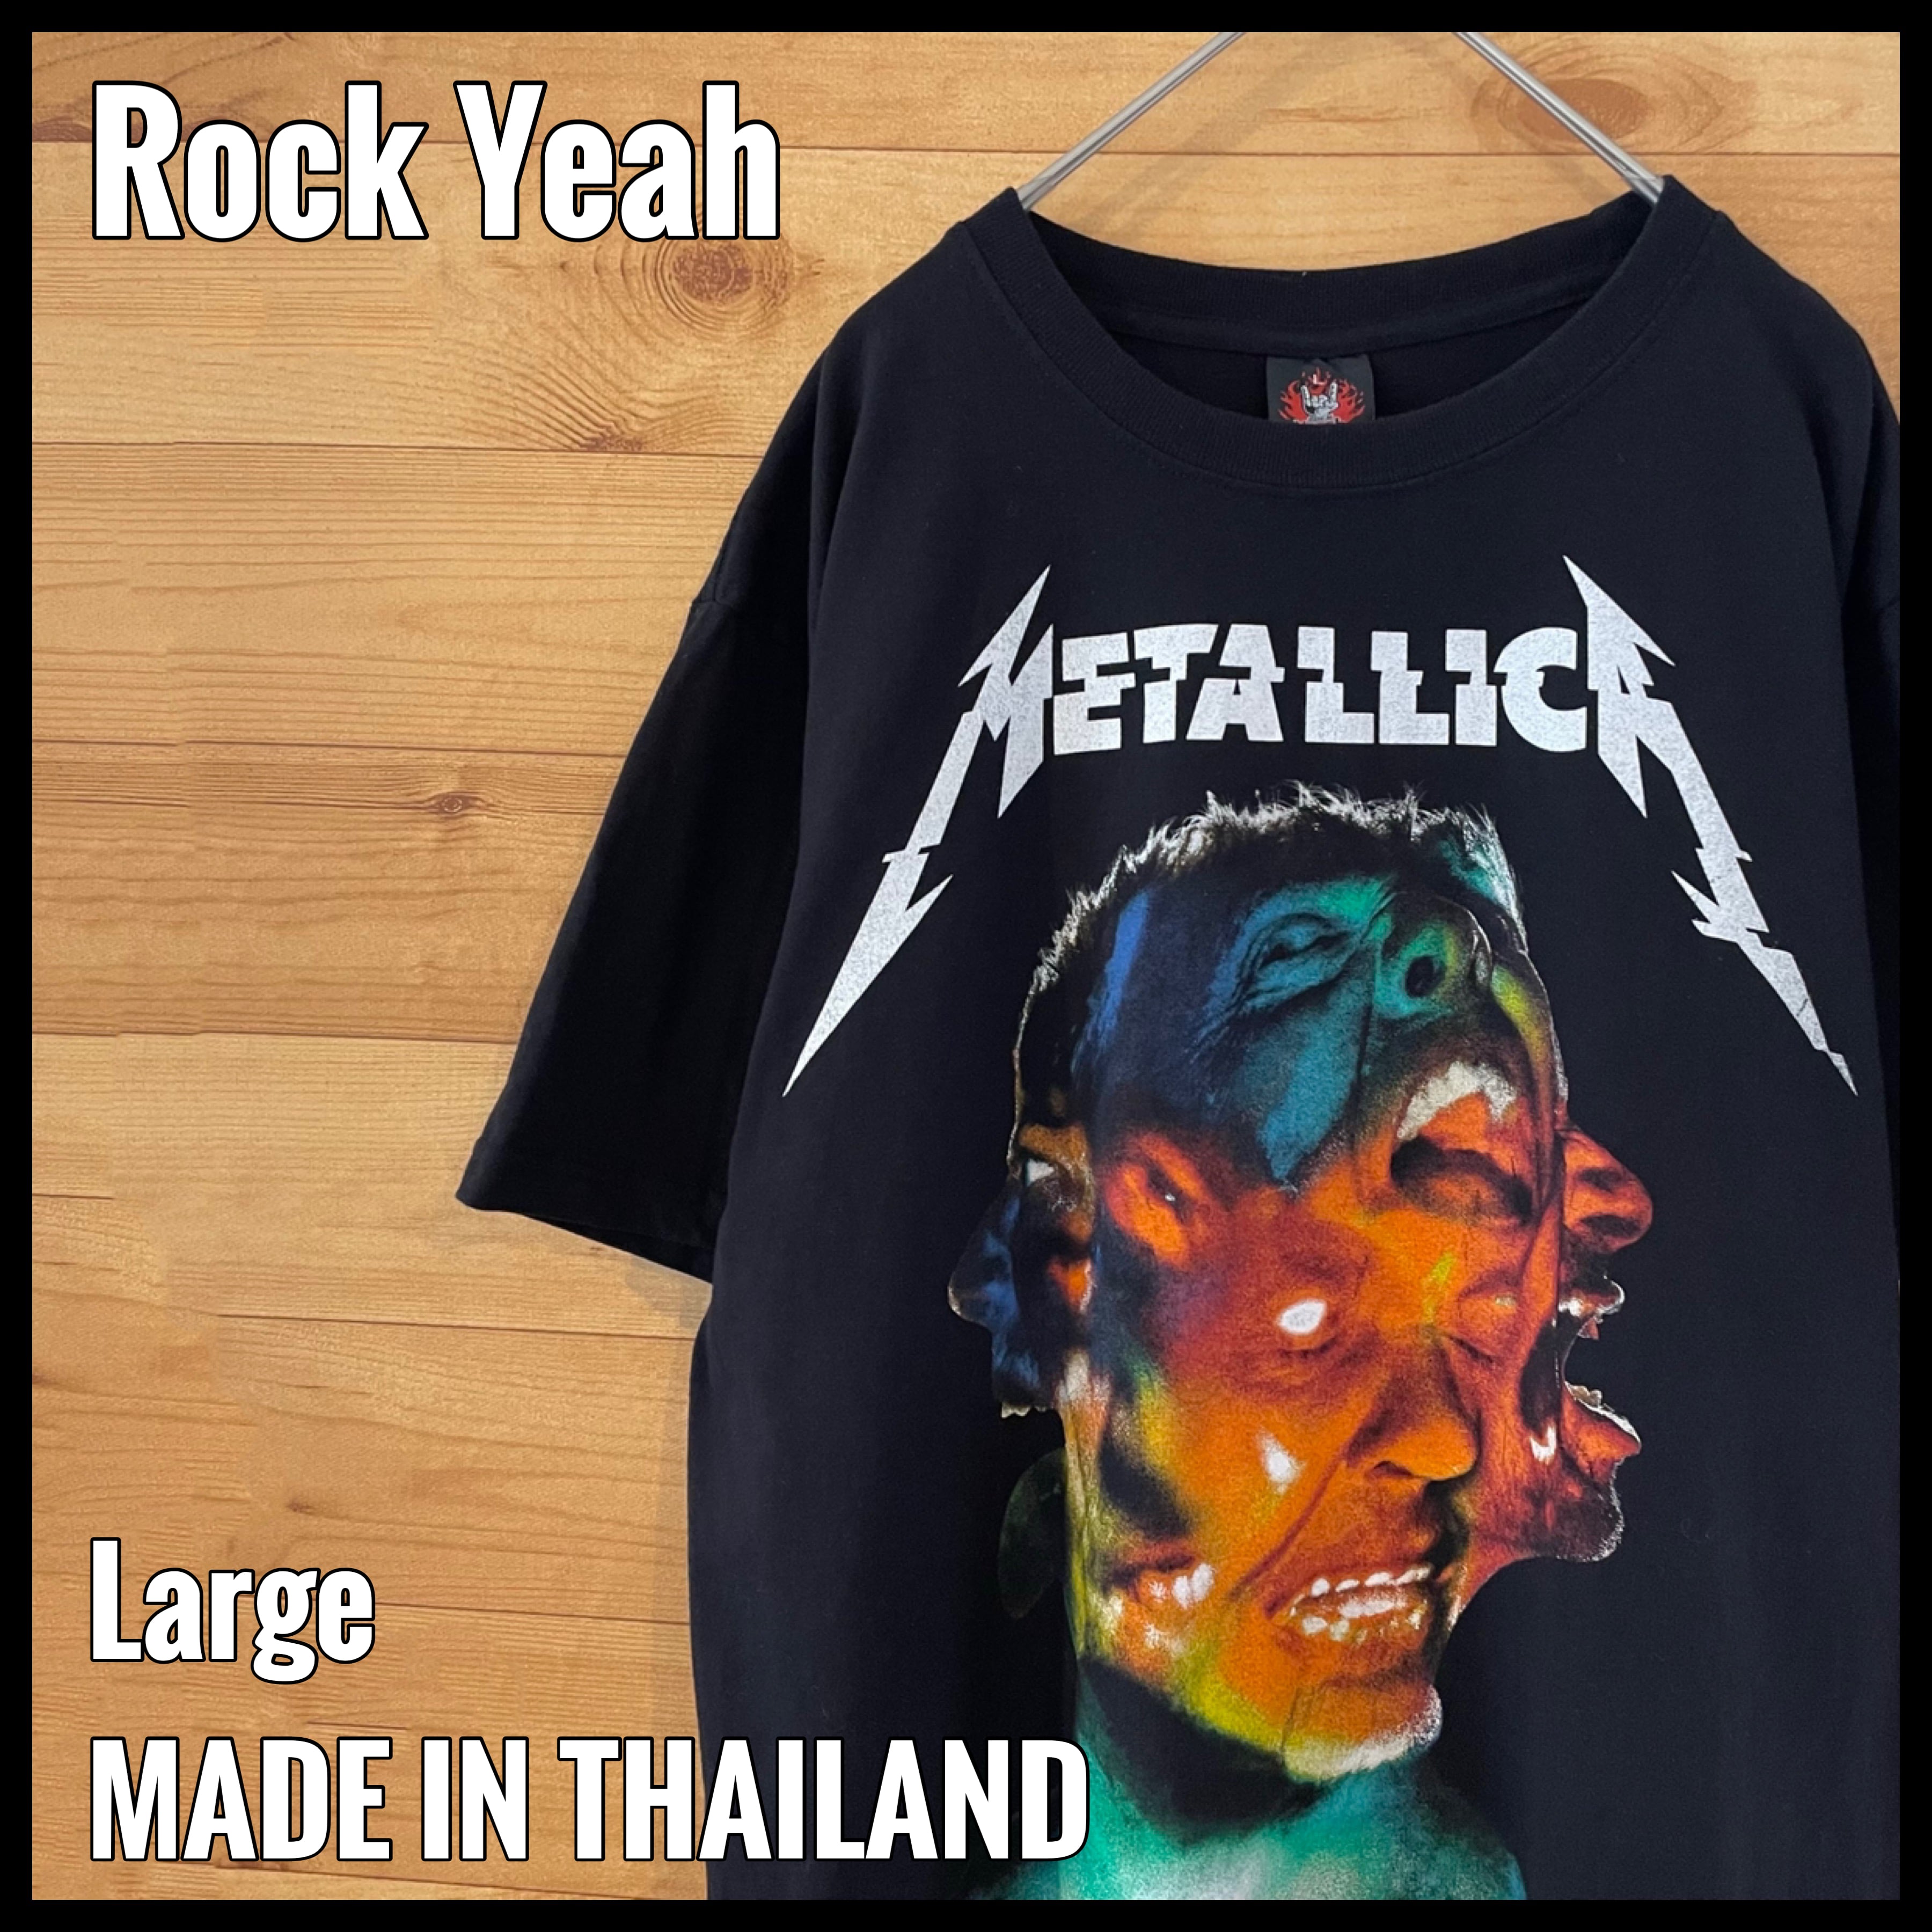 Rock Yeah】METALLICA バンドTシャツ Hardwired to Self-Destruct 